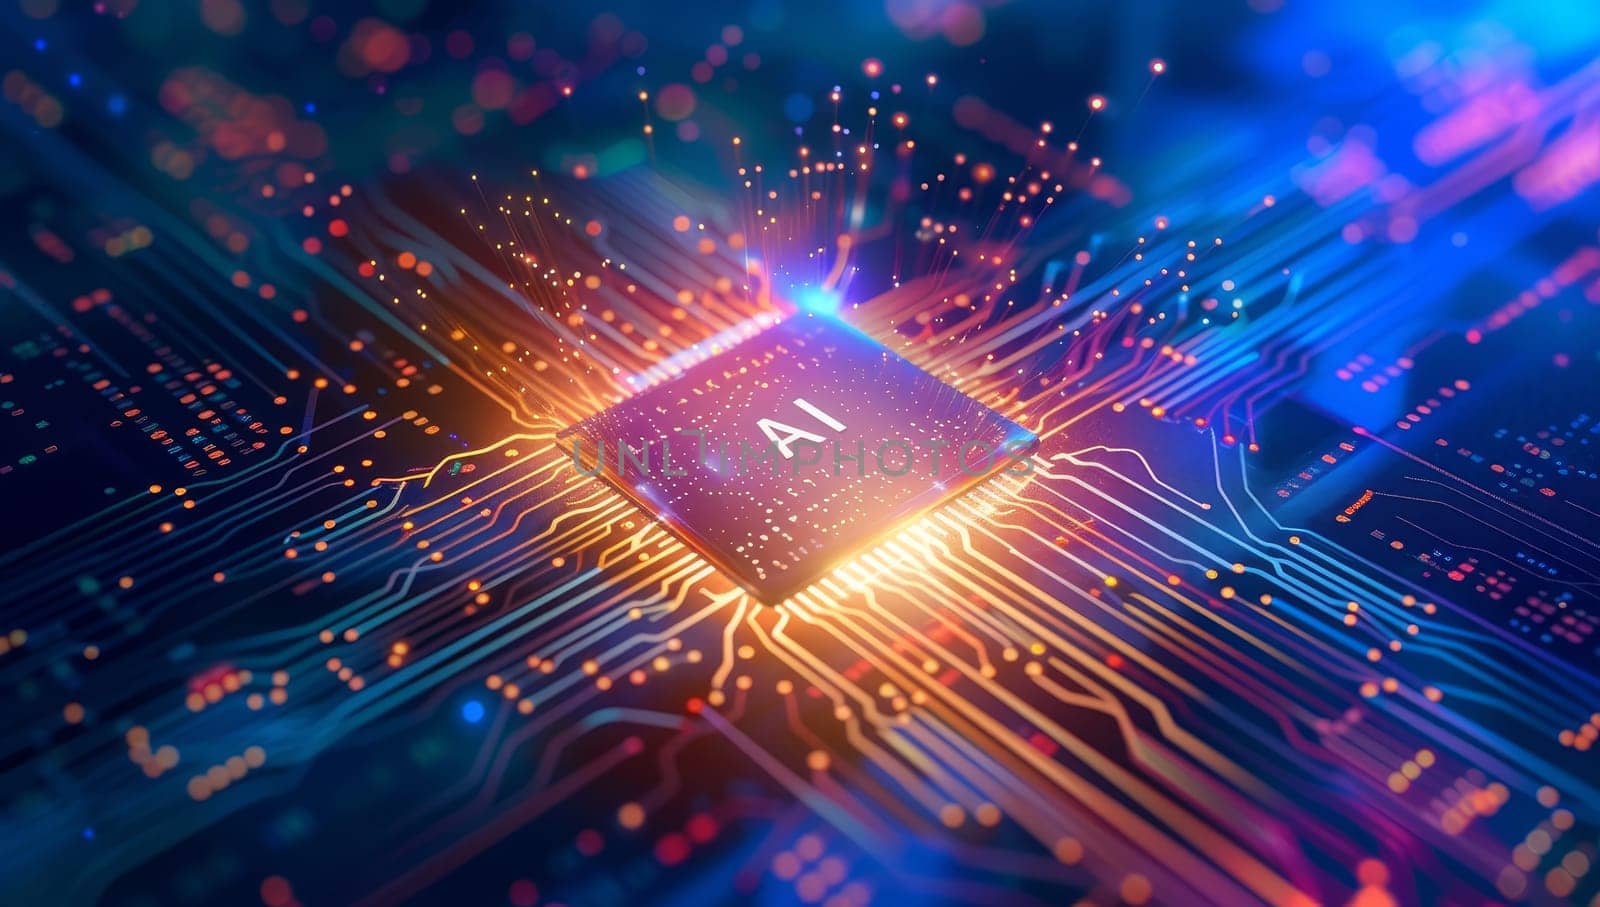 Illuminated AI chip on a complex circuit board